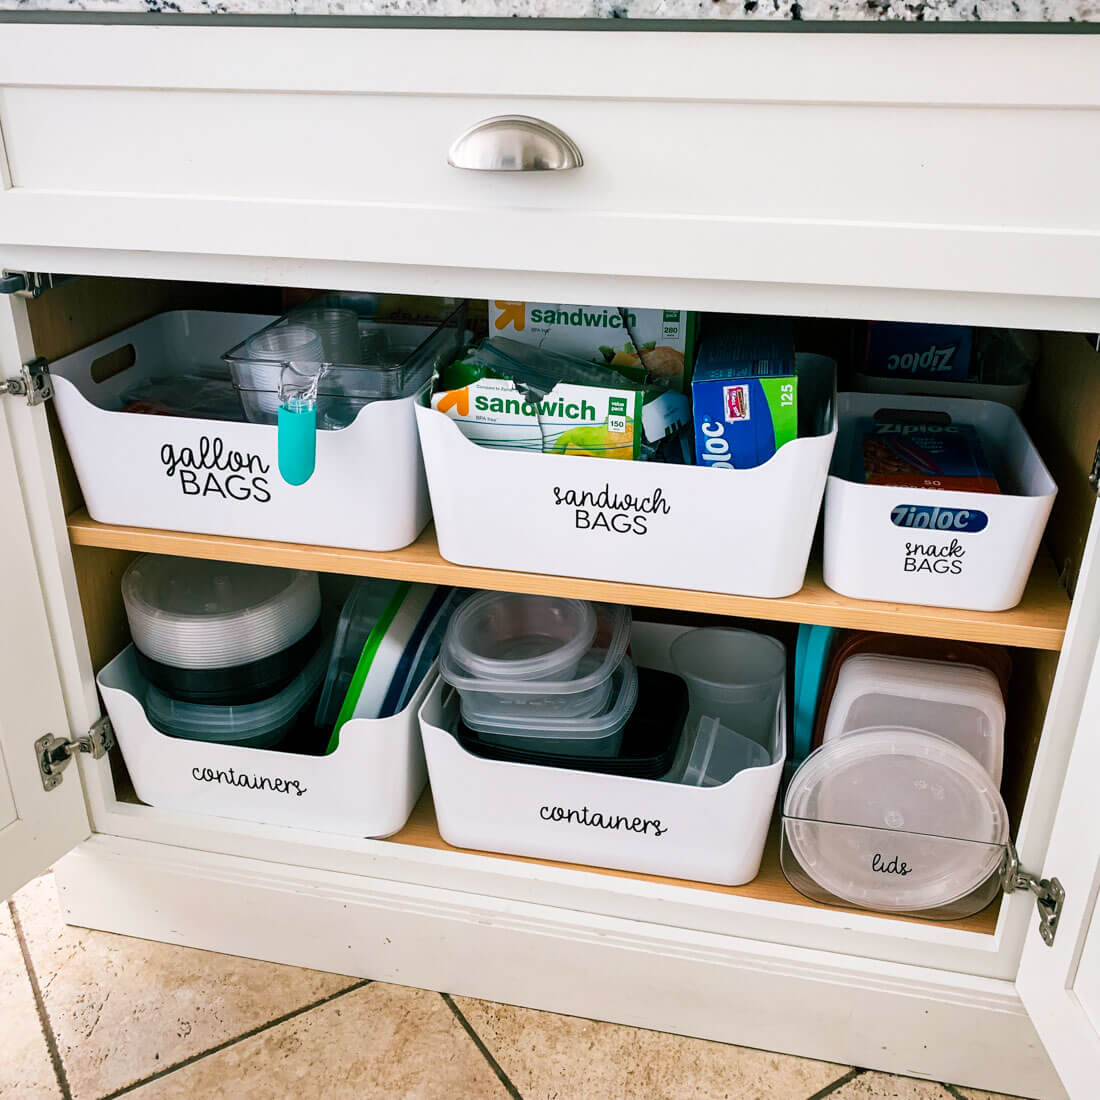 How to Organize Kitchen Cabinets - Thirty Handmade Days